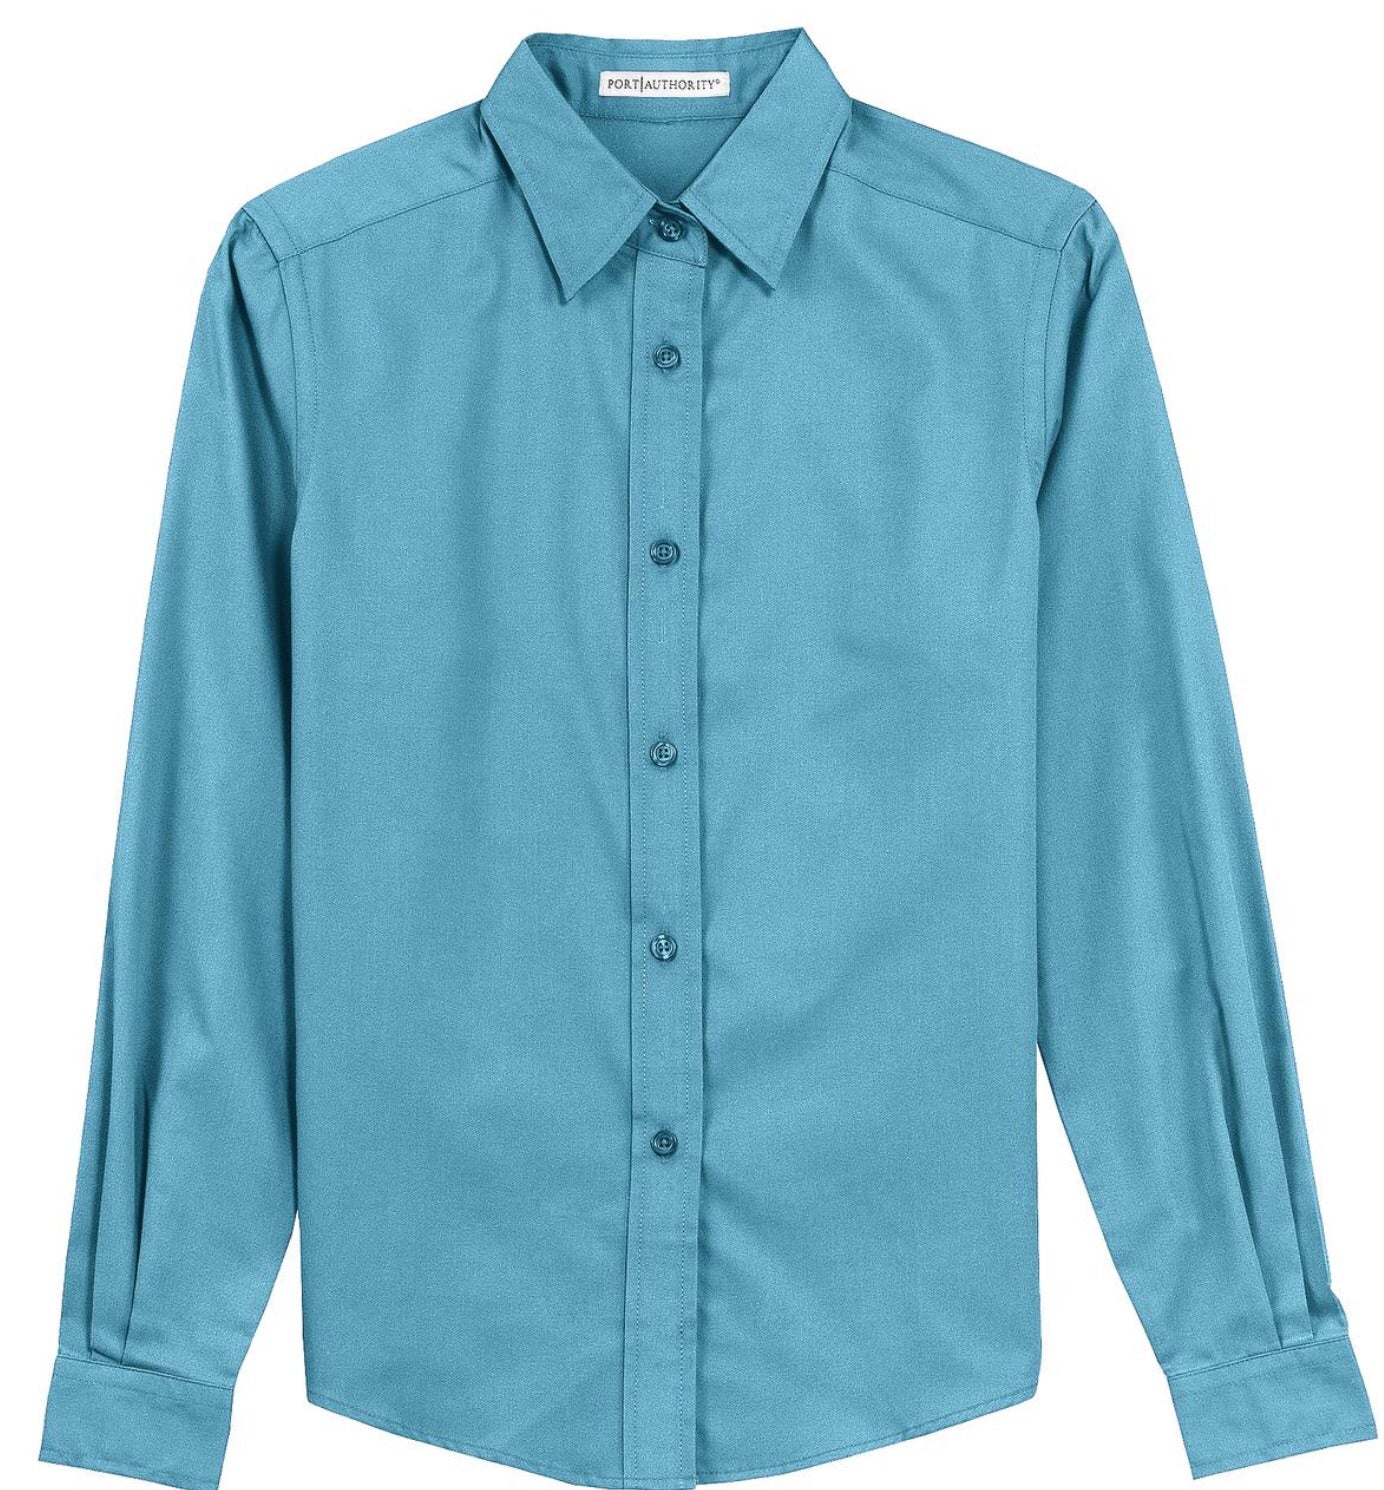 Button Up Shirt - Maui Blue - Sparkling Cowgirl